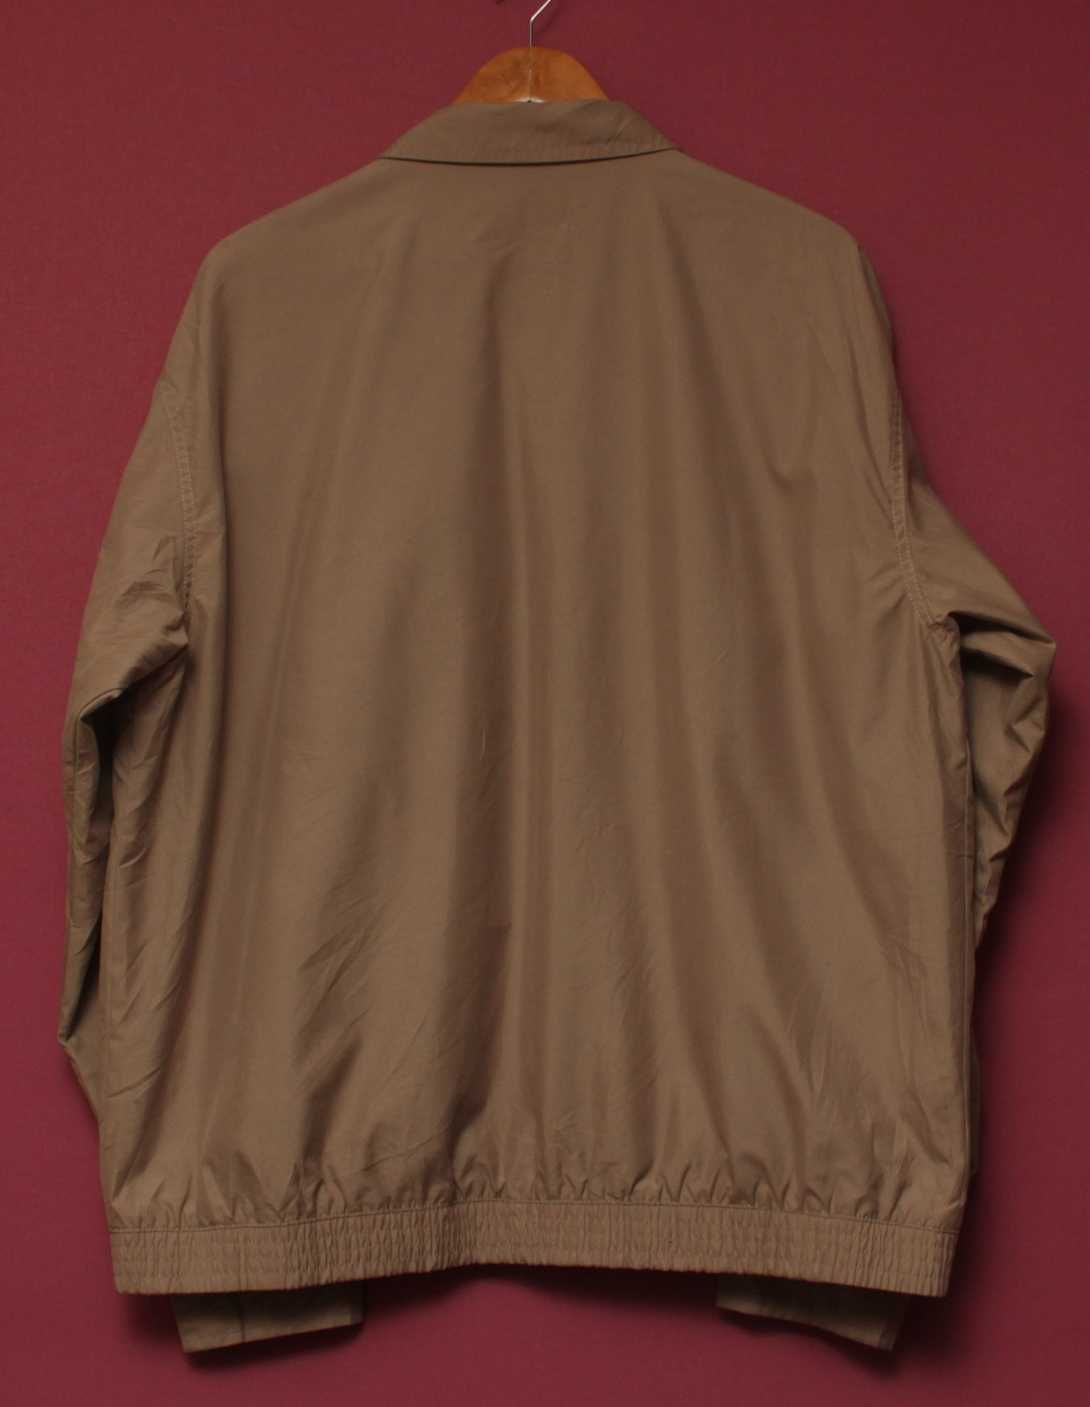 Polo Ralph Lauren XL Chaps куртка из полиестра и хлопка